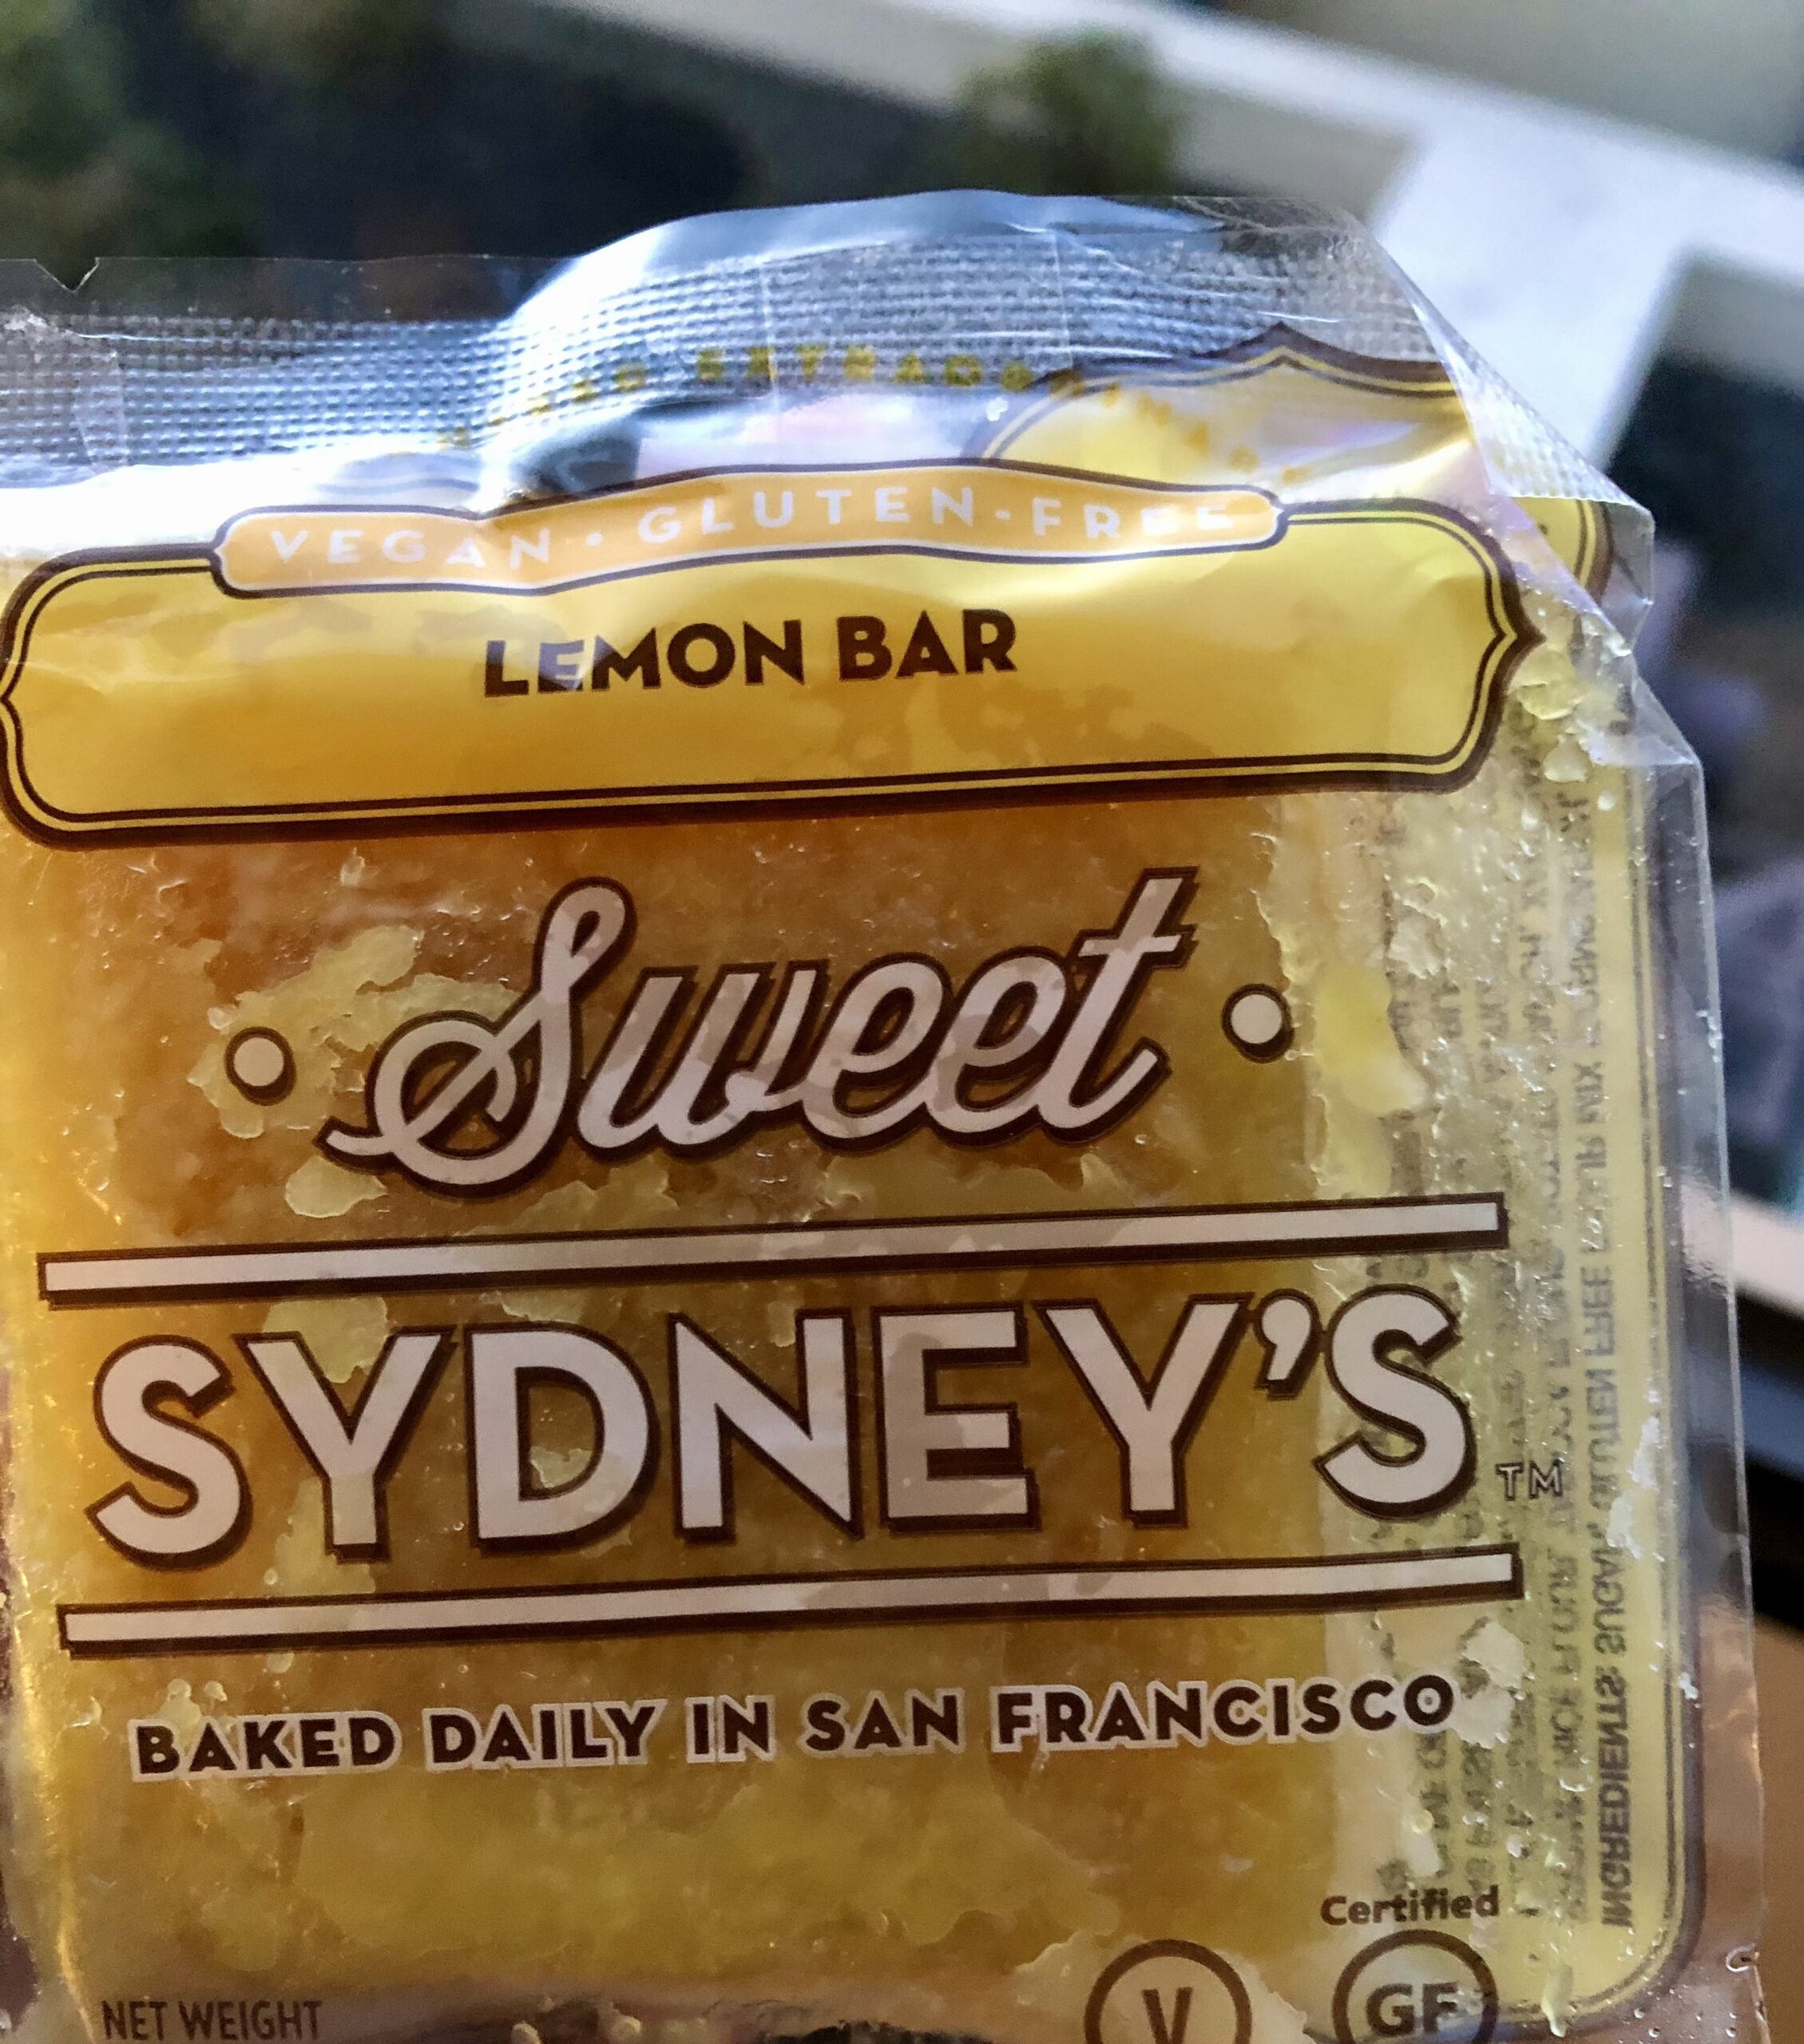 Sweet Sydney's gluten free lemon bar // Luke's Local